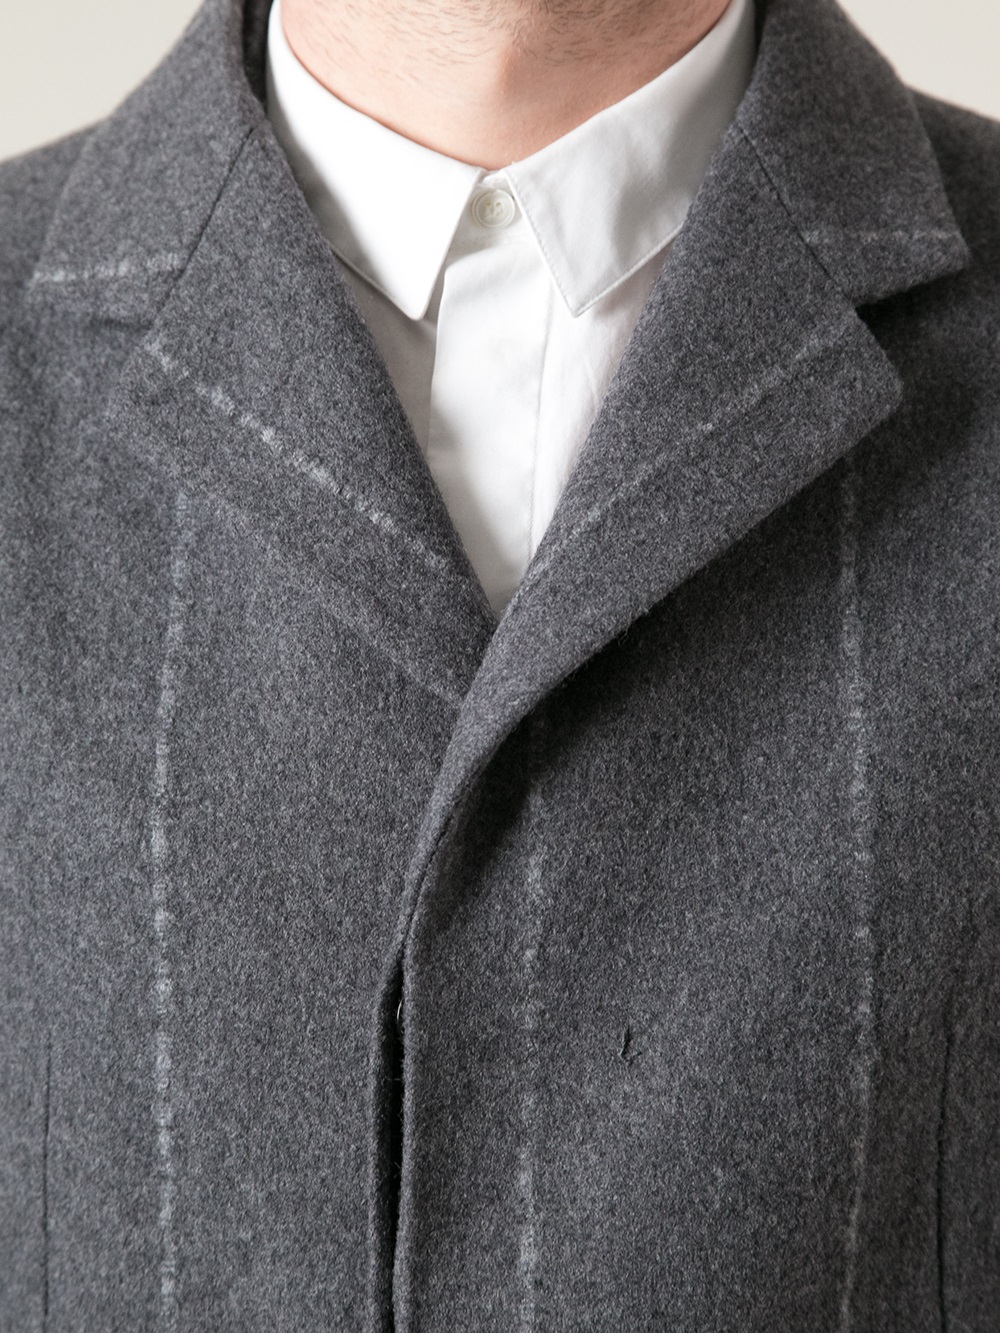 Lyst - Jil Sander Chalk Stripe Overcoat in Gray for Men